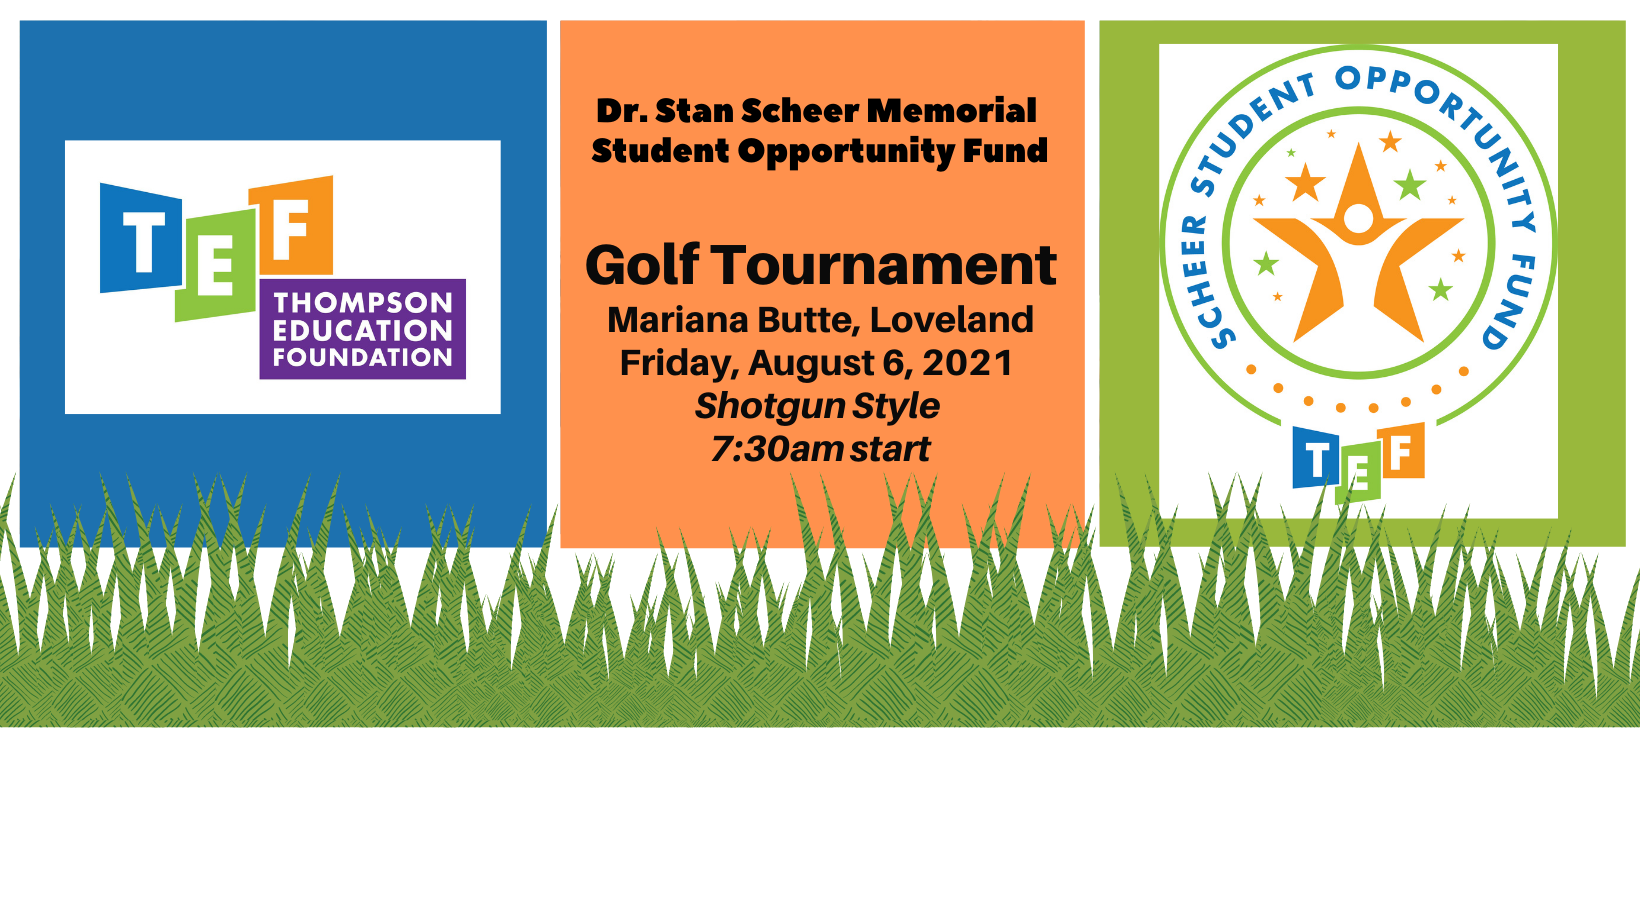 Dr. Stan Scheer Memorial Student Opportunity Fund Golf Tournament by TEF